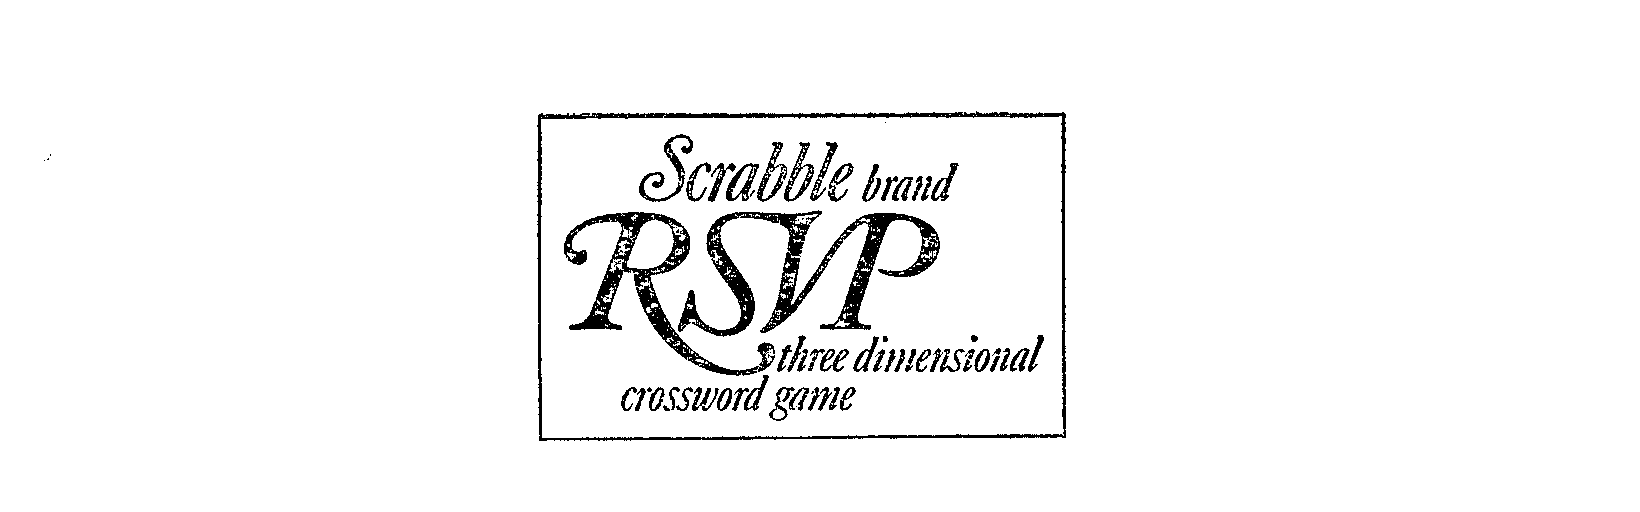  SCRABBLE BRAND RSVP THREE DIMENSIONAL CROSSWORD GAME